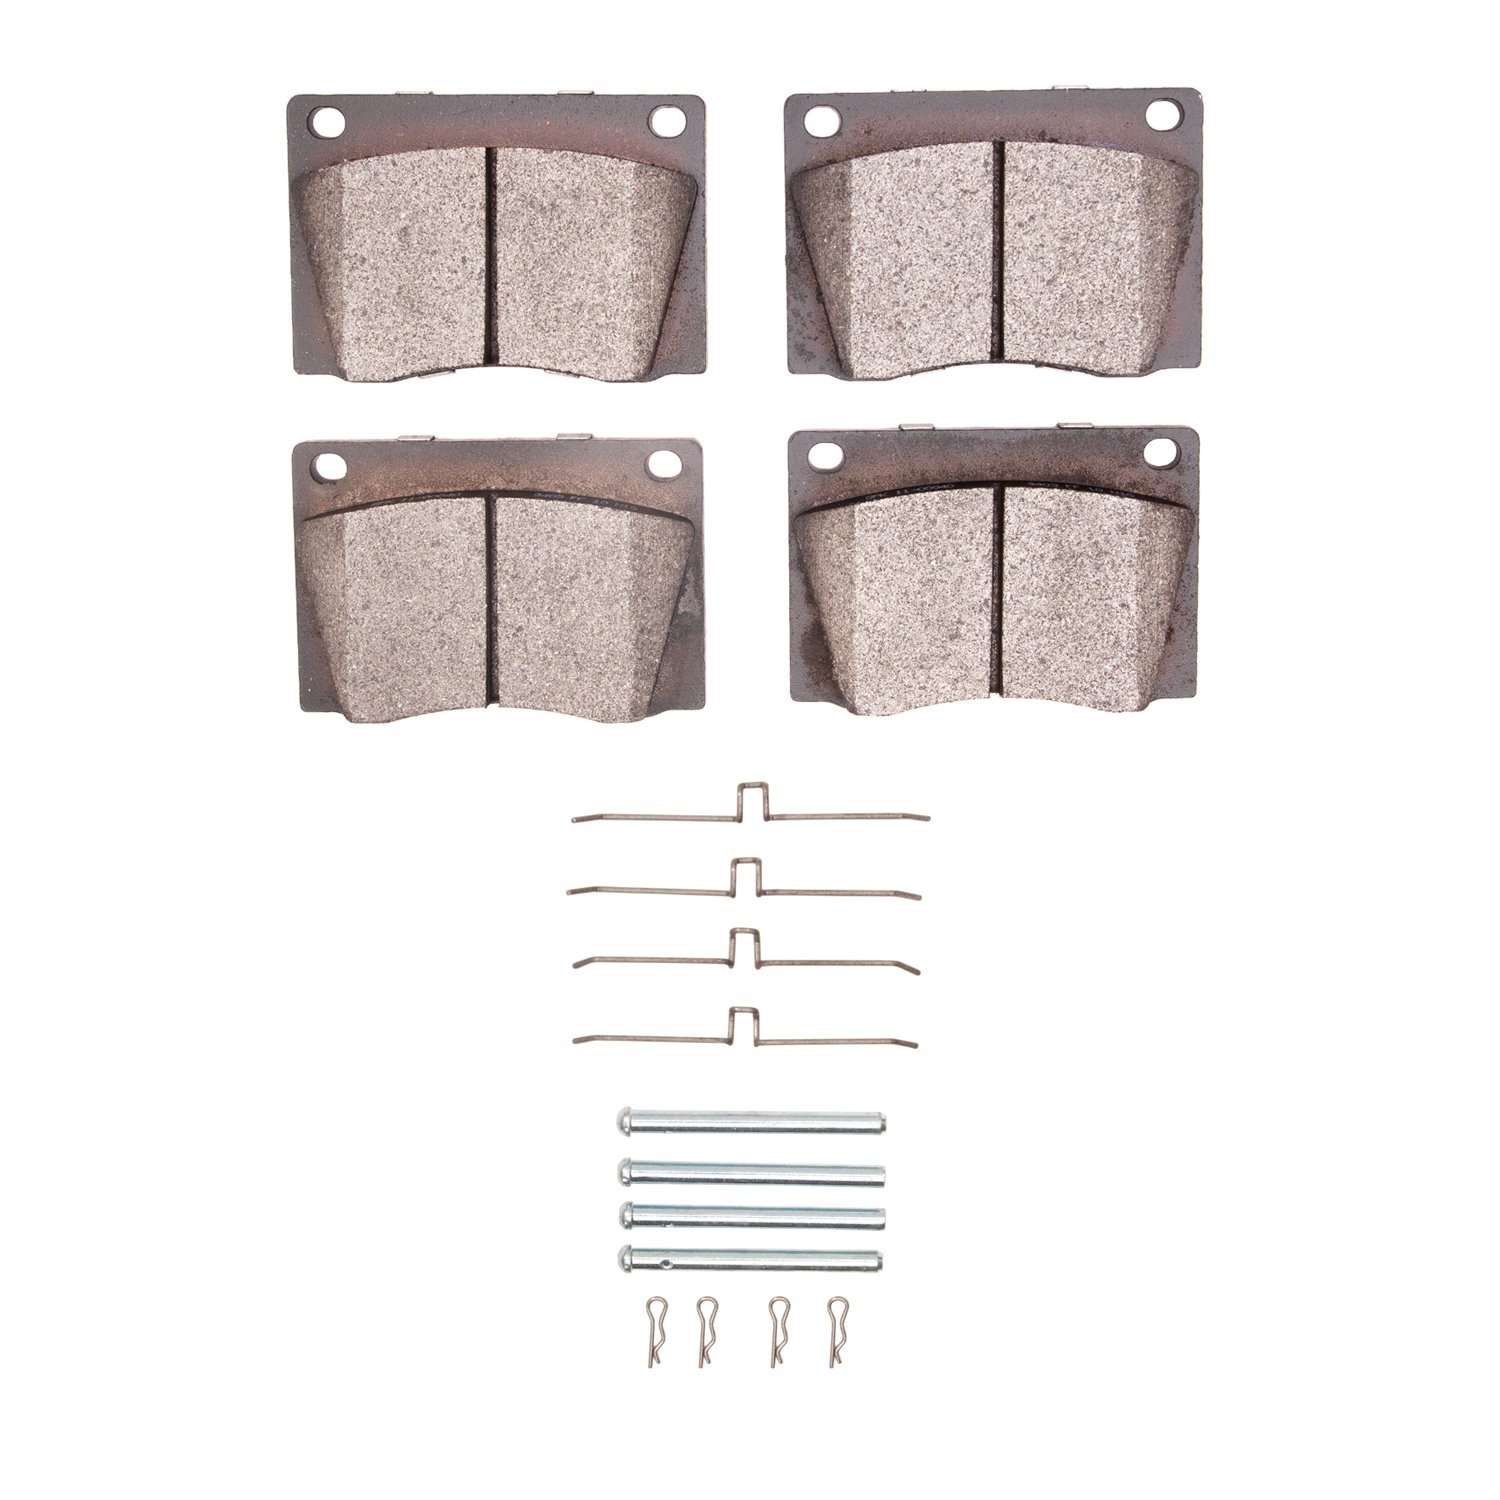 1551-0004-01 5000 Advanced Low-Metallic Brake Pads & Hardware Kit, 1961-1979 Multiple Makes/Models, Position: Front